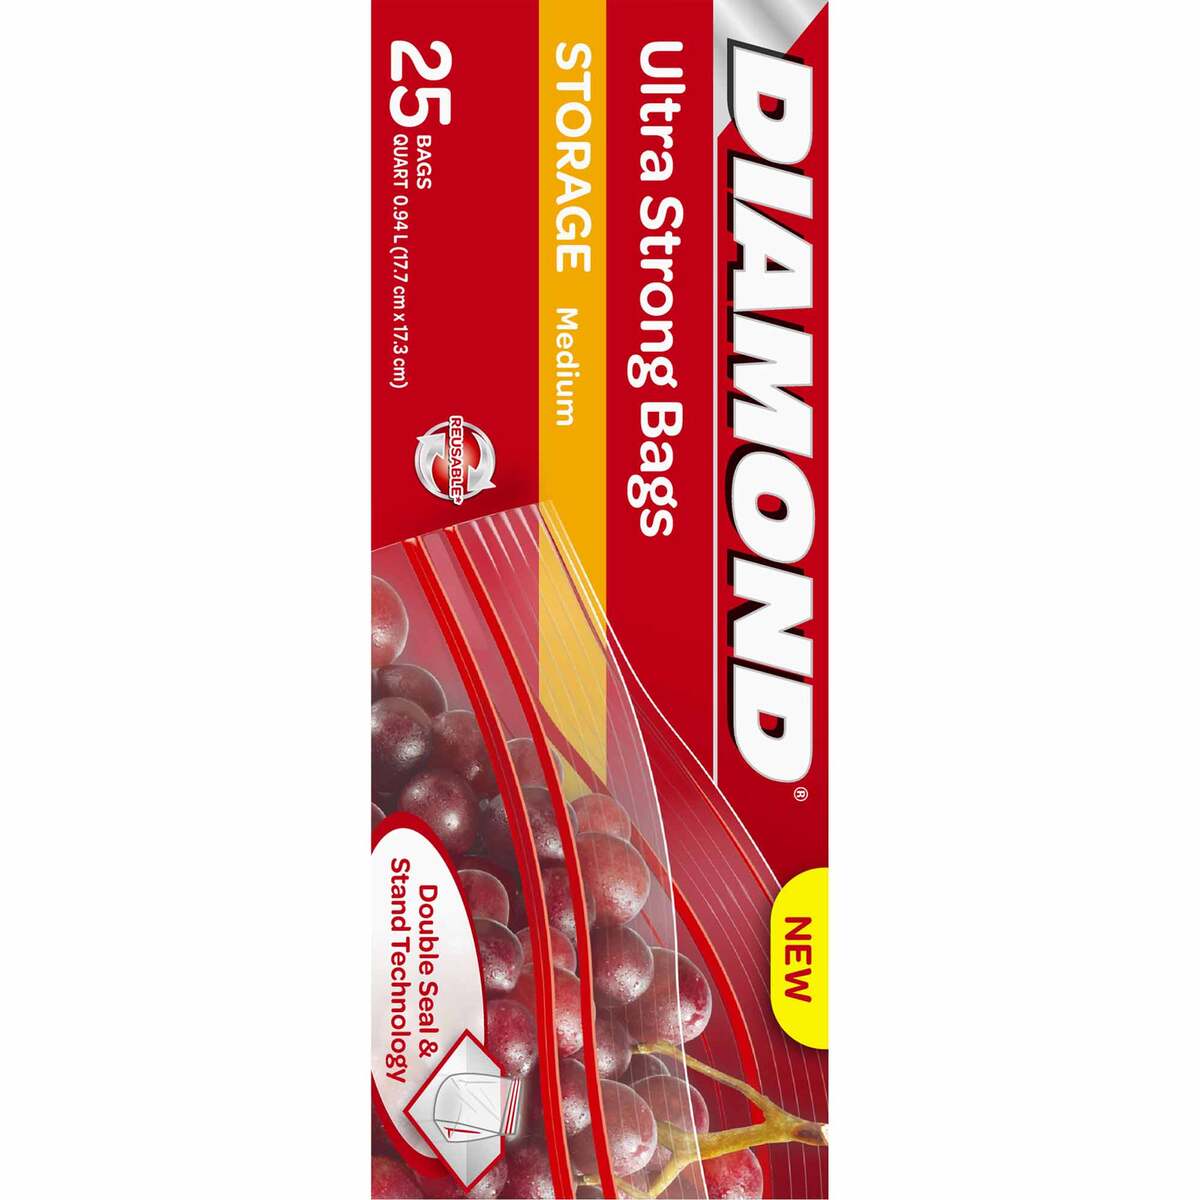 Diamond Ultra Strong Zipper Storage Bags Medium Oxo-Biodegradable Size 17.7cm x 17.3cm 25 pcs